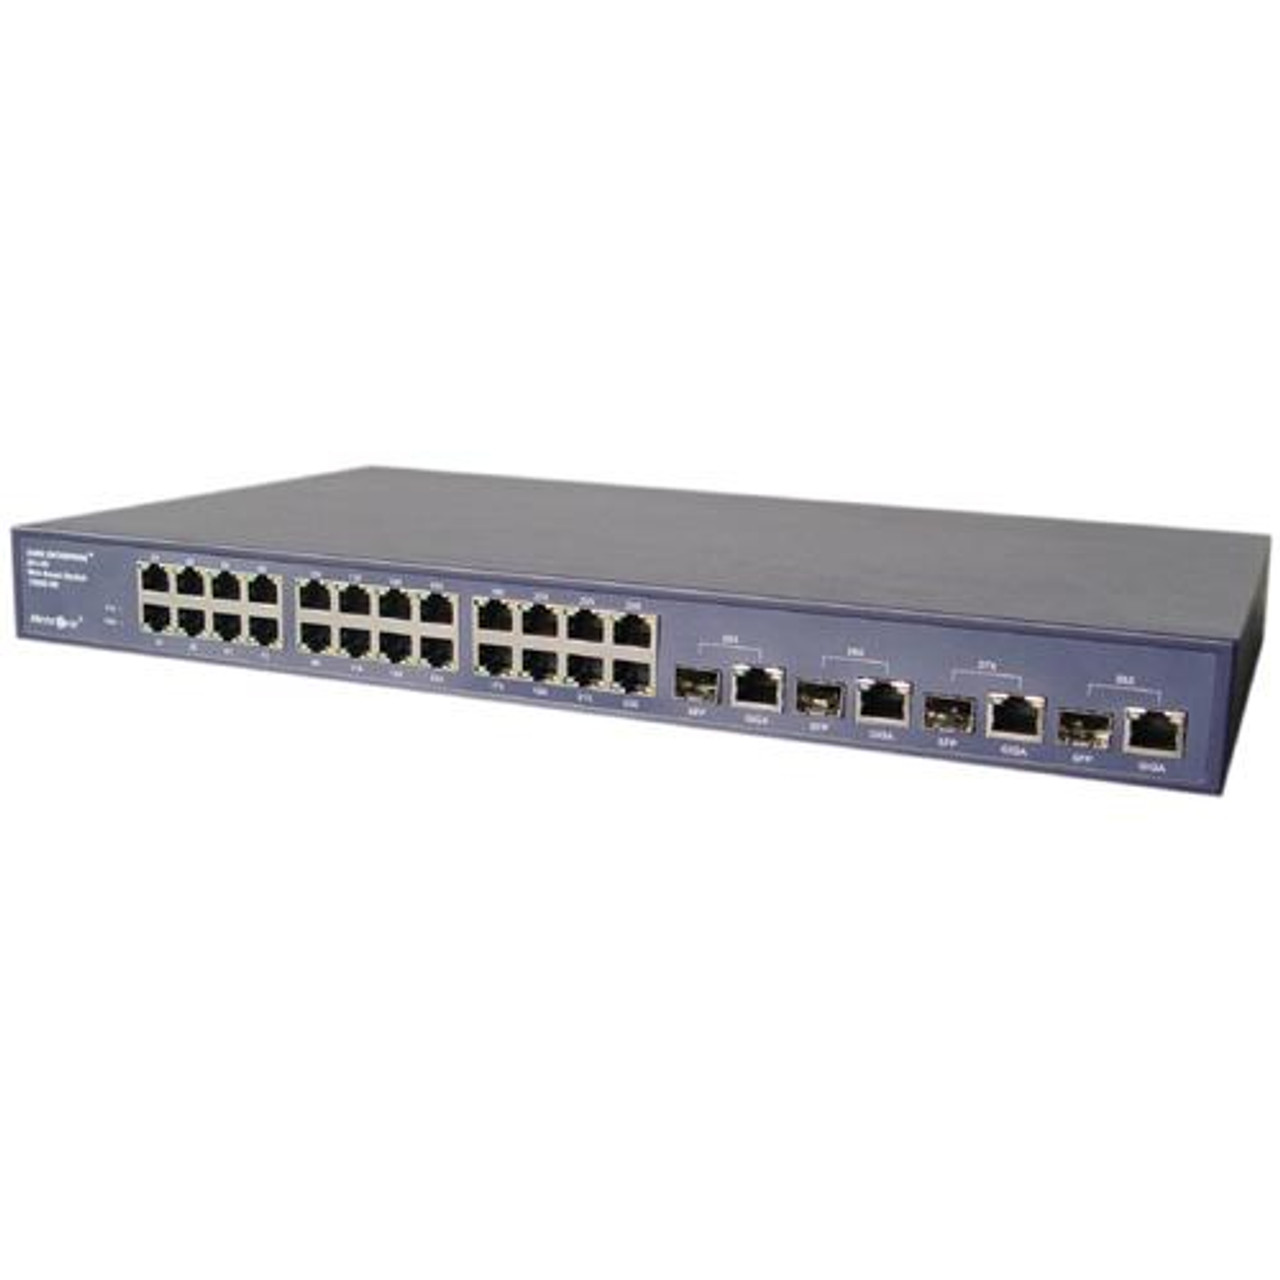 ESW-8228 EnGenius ESW-8228 Managed Ethernet Switch 2 x SFP (mini-GBIC) Shared 4 x 10/100/1000Base-T LAN, 24 x 10/100Base-TX LAN (Refurbished)